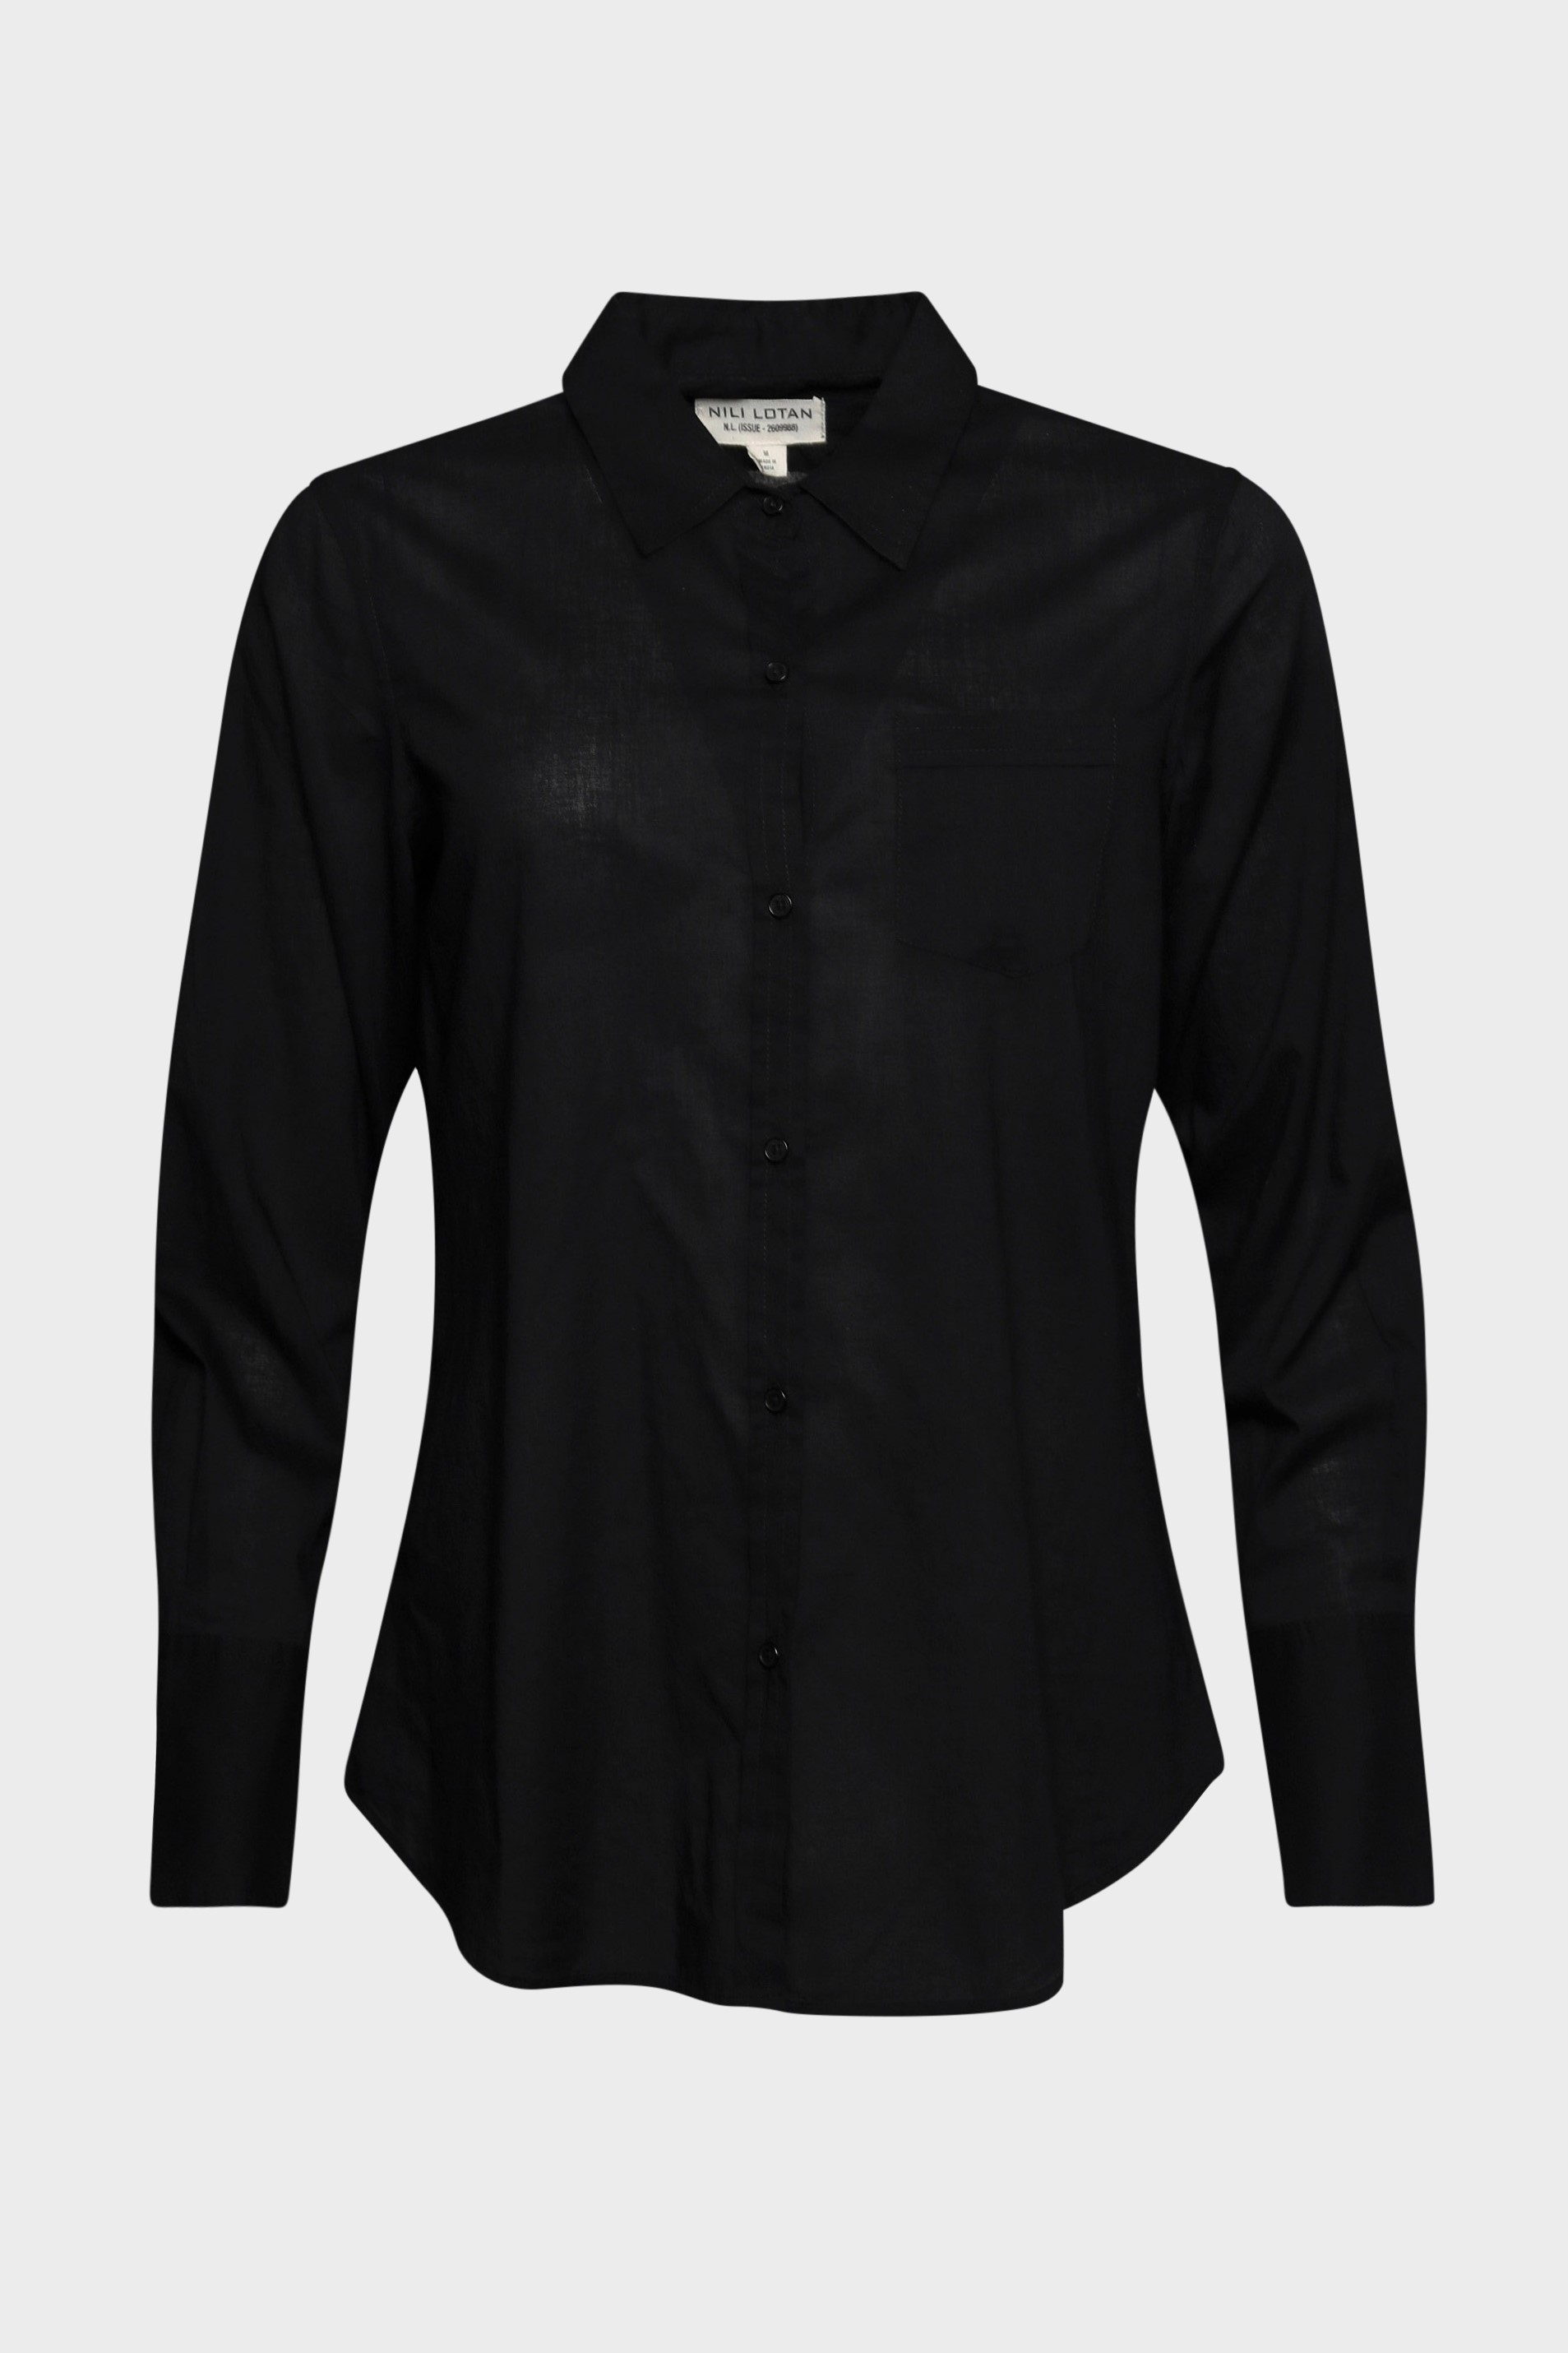 NILI LOTAN Cotton Voile NL Shirt in Black